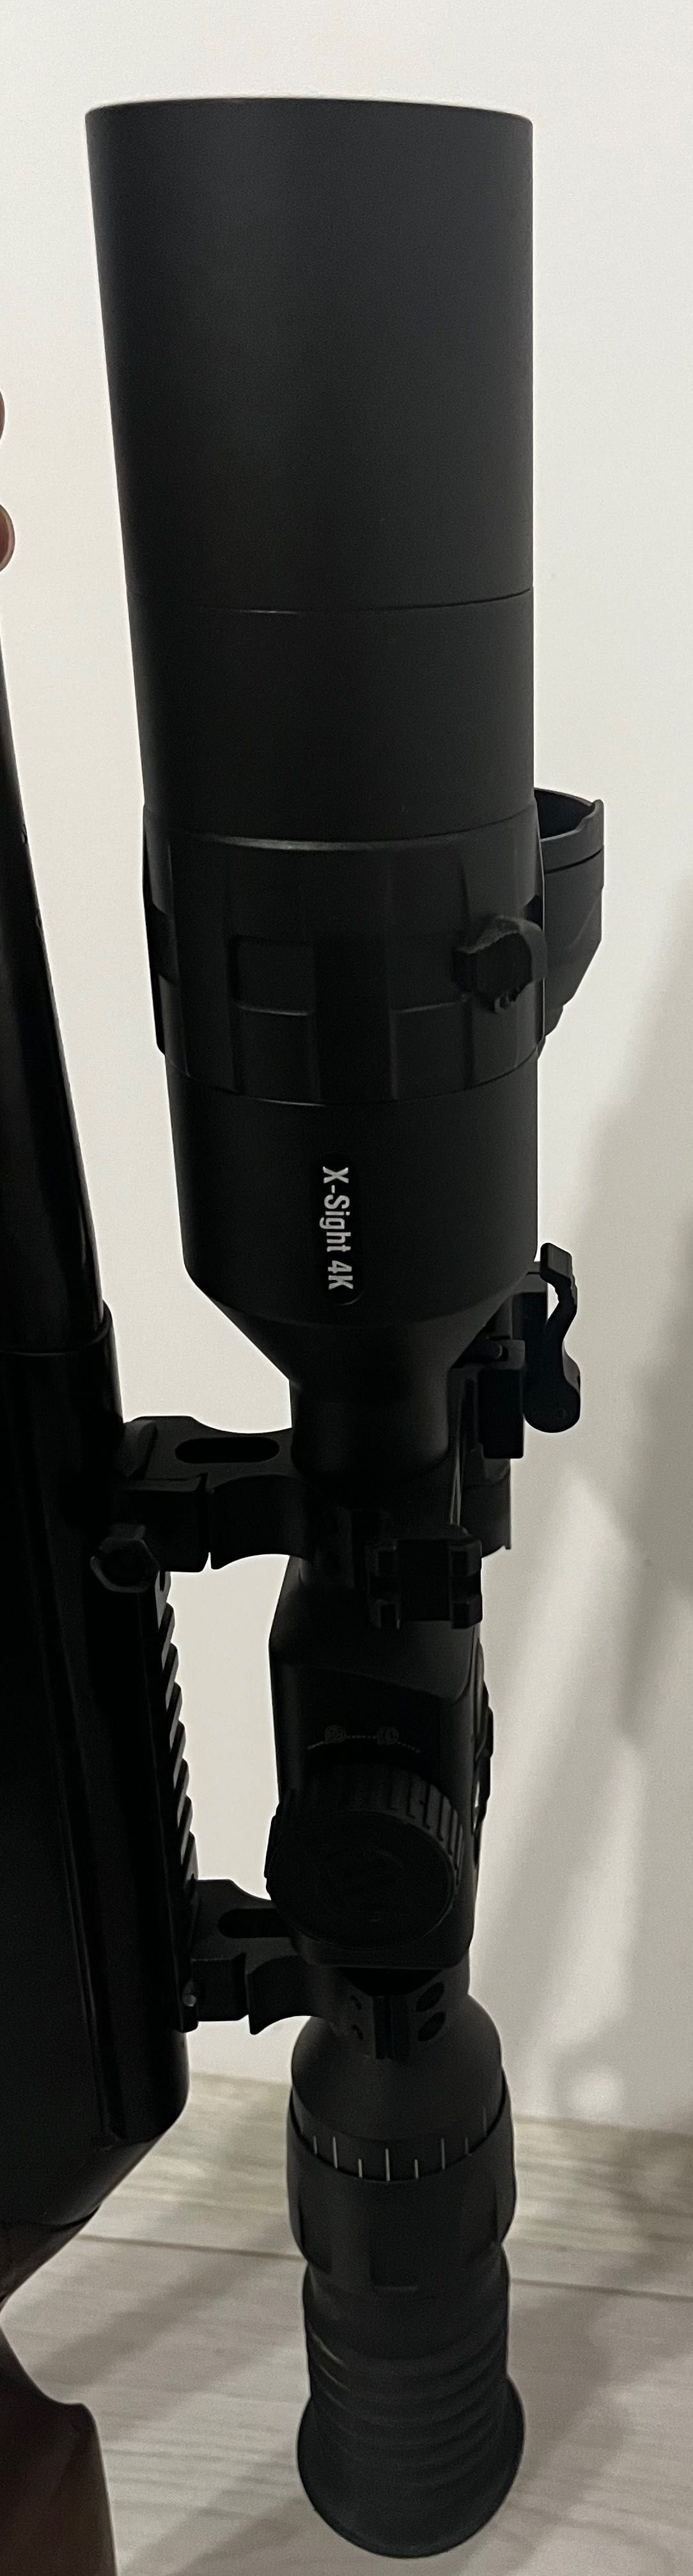 Нощно виждане ATN X-Sight 4k PRO 5-20x smart hd day/night riflescope